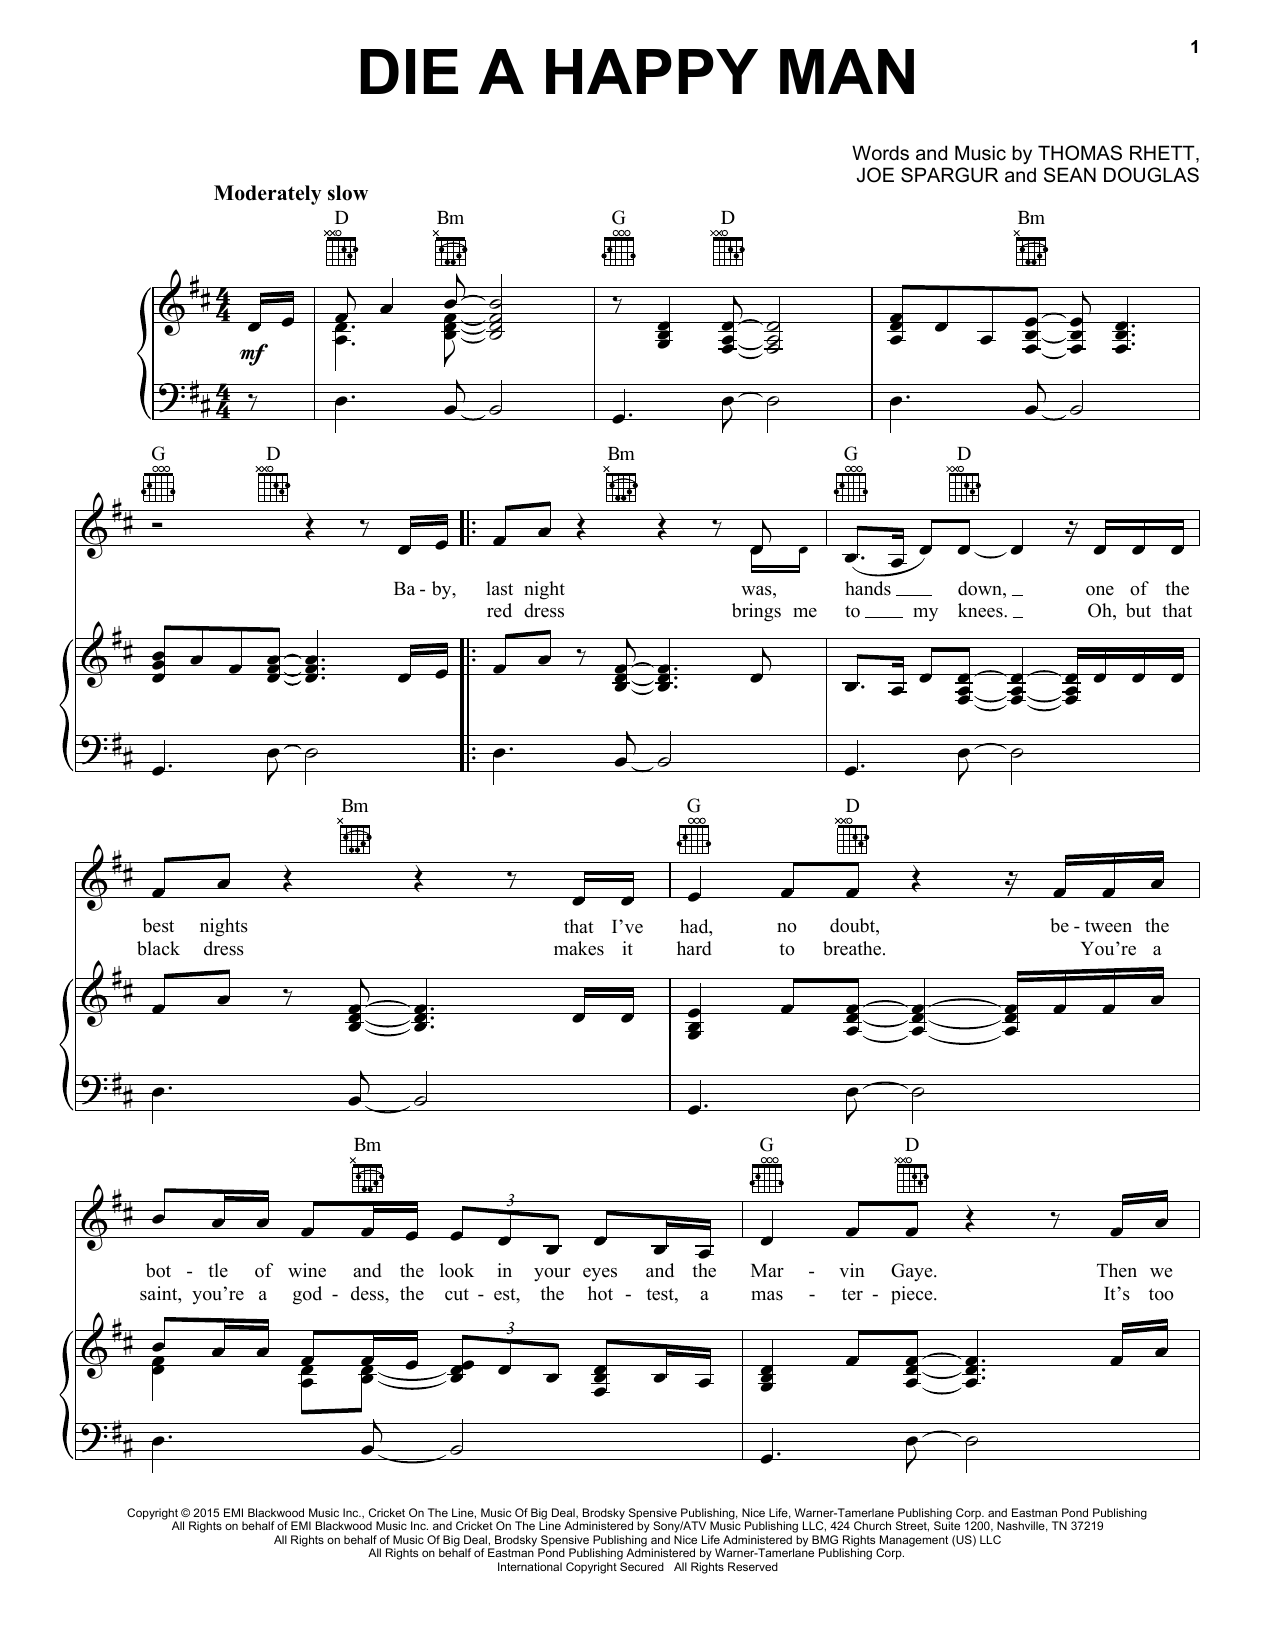 Thomas Rhett Die A Happy Man Sheet Music Notes & Chords for Trombone - Download or Print PDF